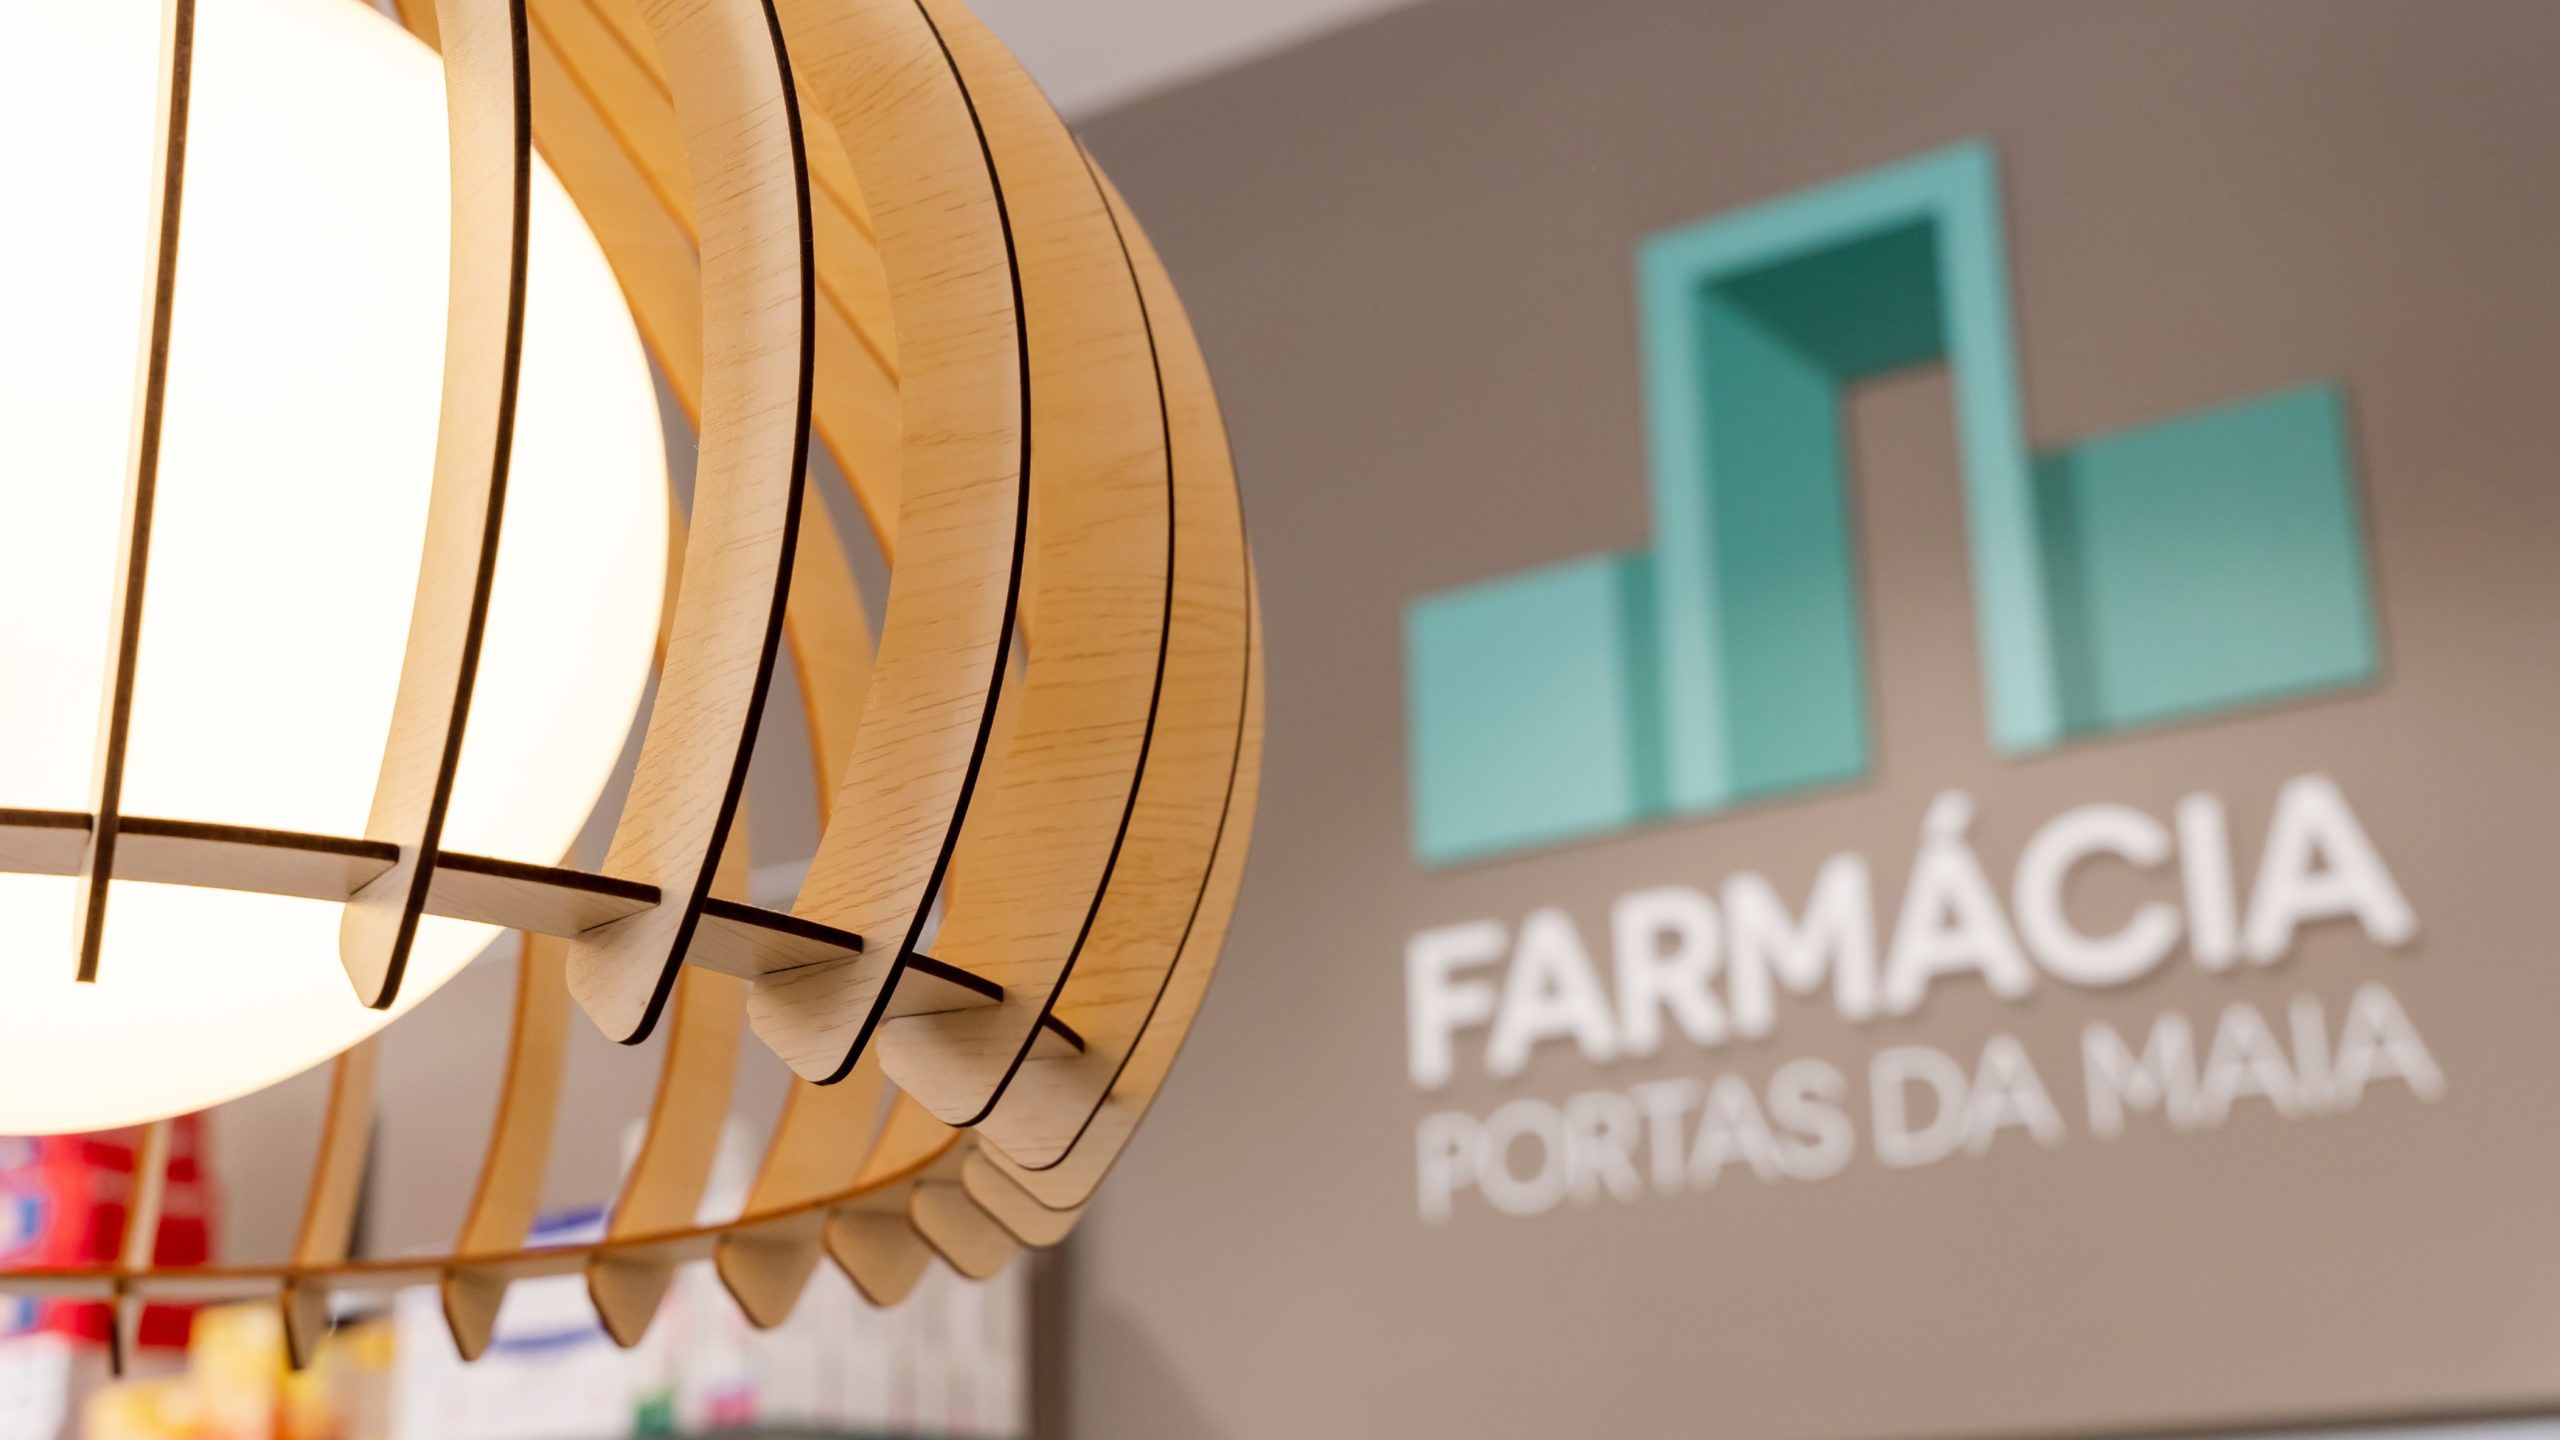 Farmacia_Portas_Da_Maia_medd design-2022-td